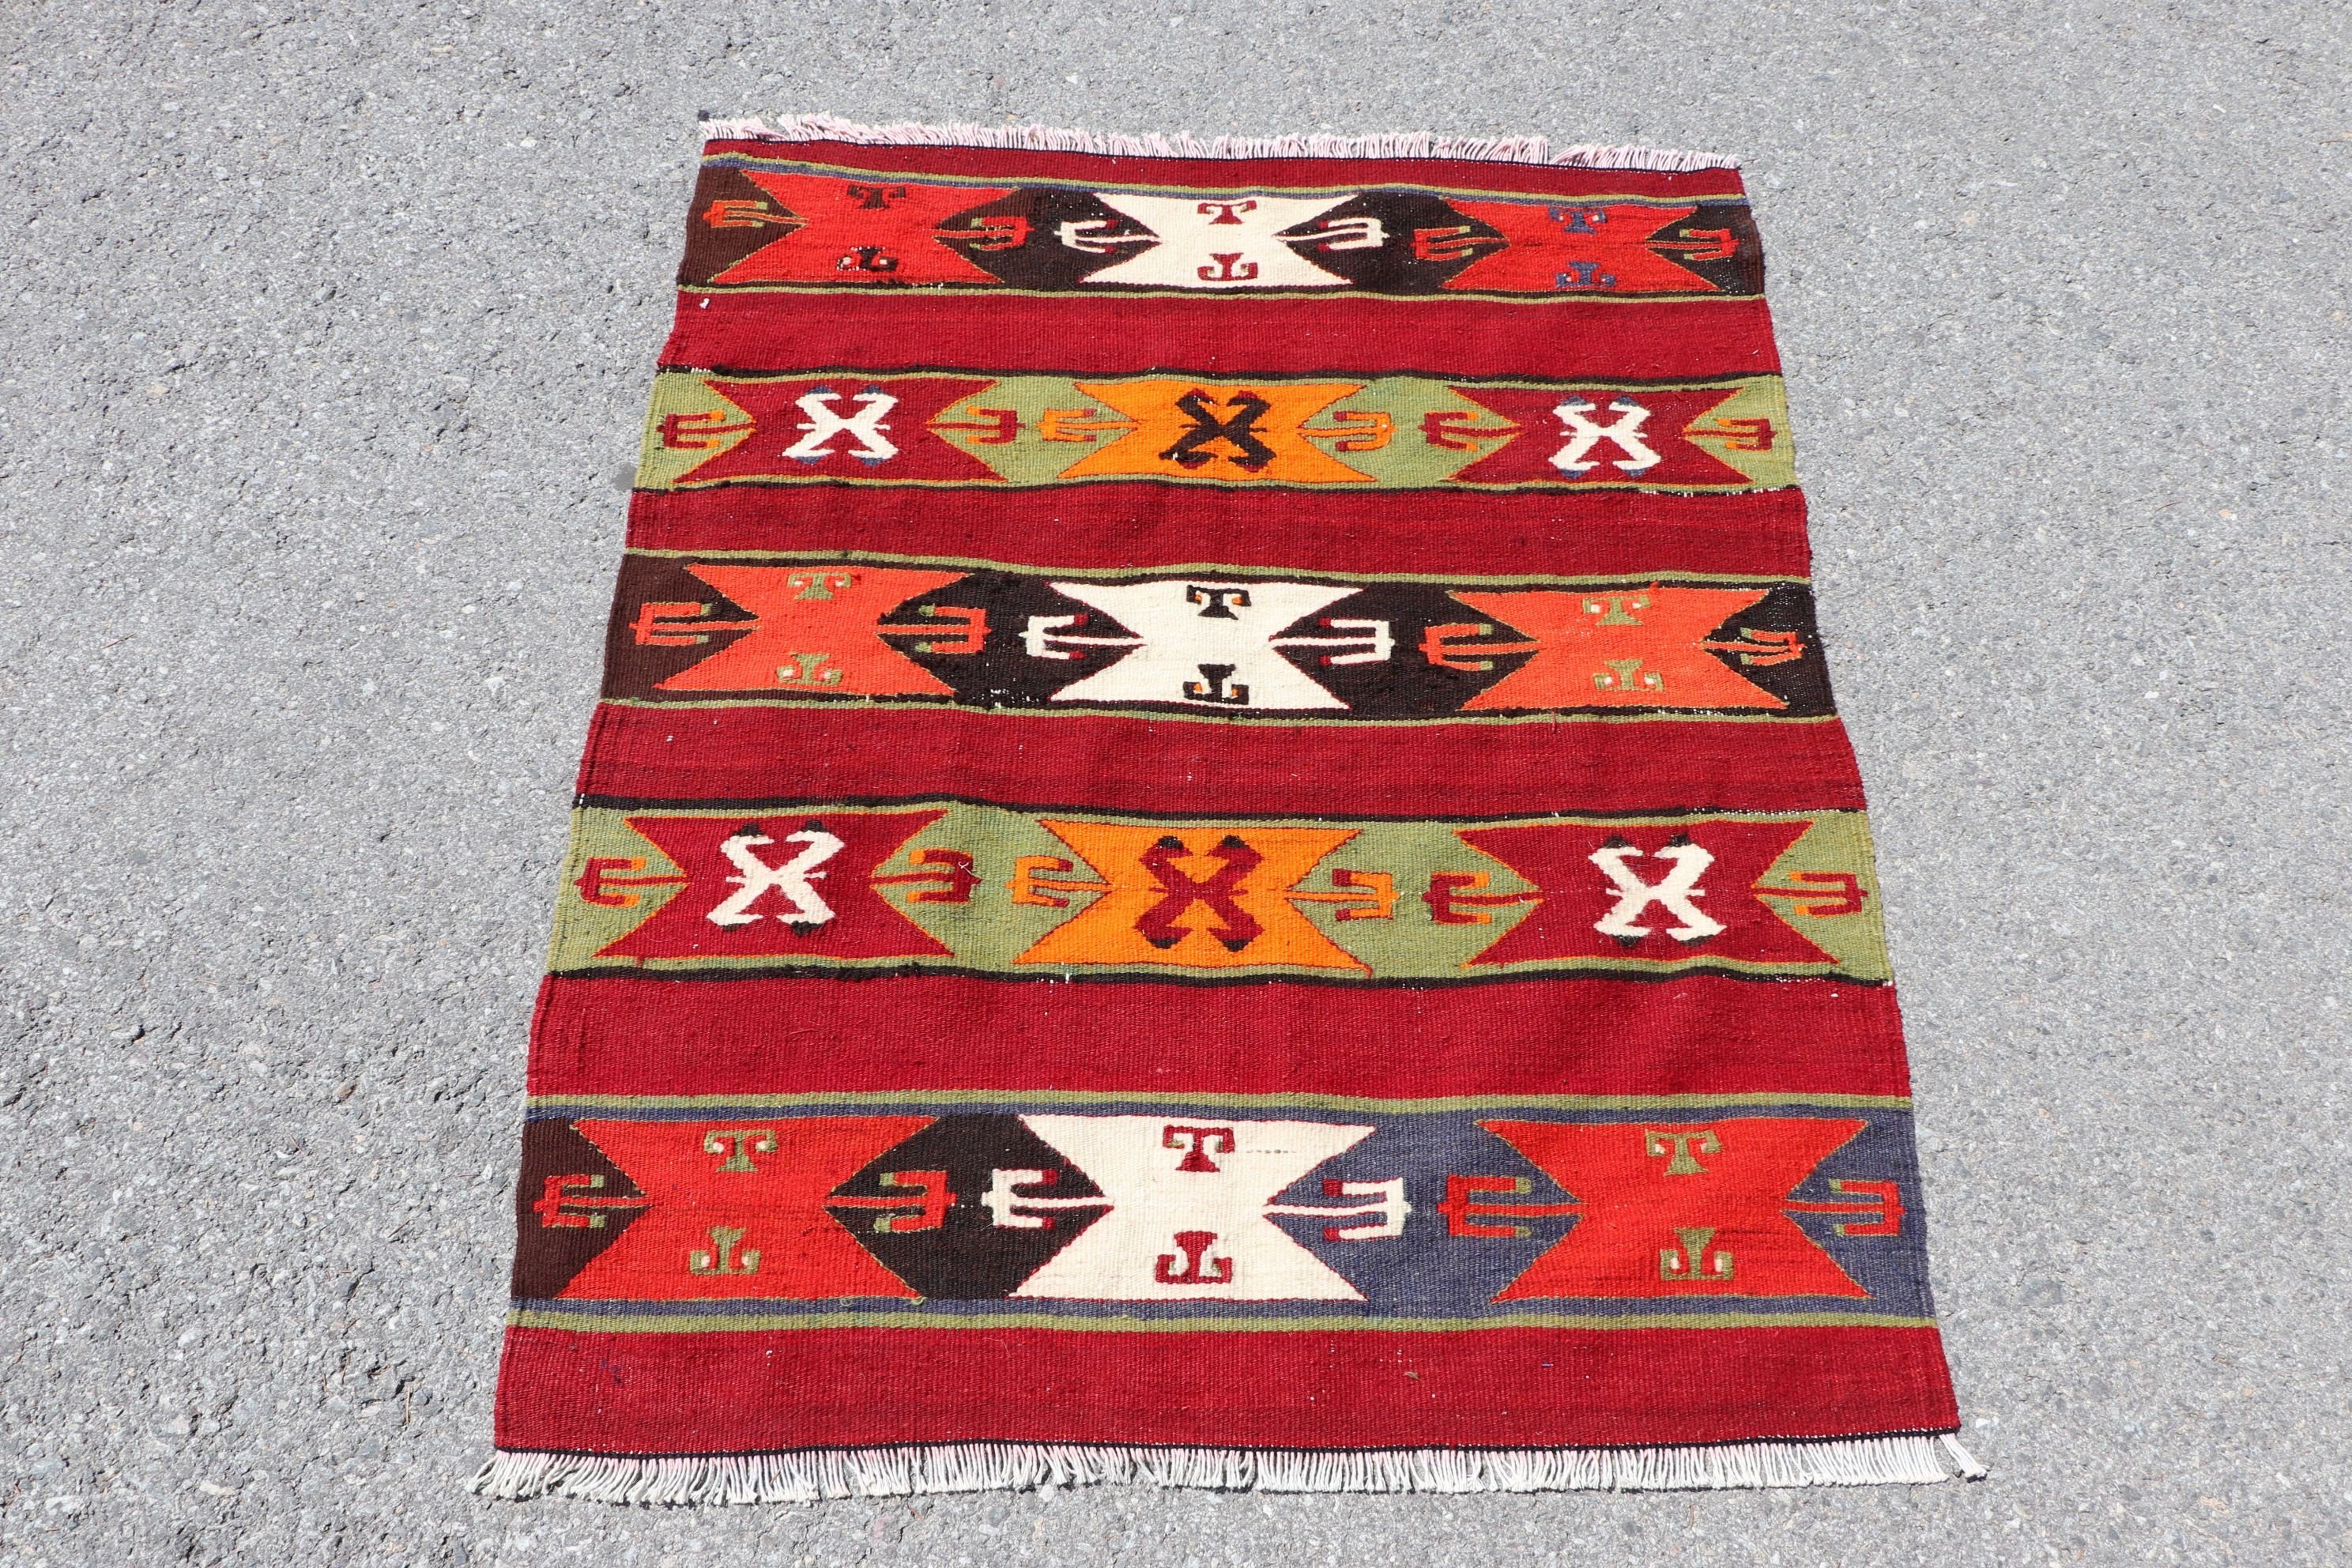 Anatolian Rug, Bedroom Rugs, Turkish Rug, Home Decor Rugs, Vintage Rug, Nursery Rugs, Red Wool Rug, Rugs for Bath, 3x3.4 ft Small Rug